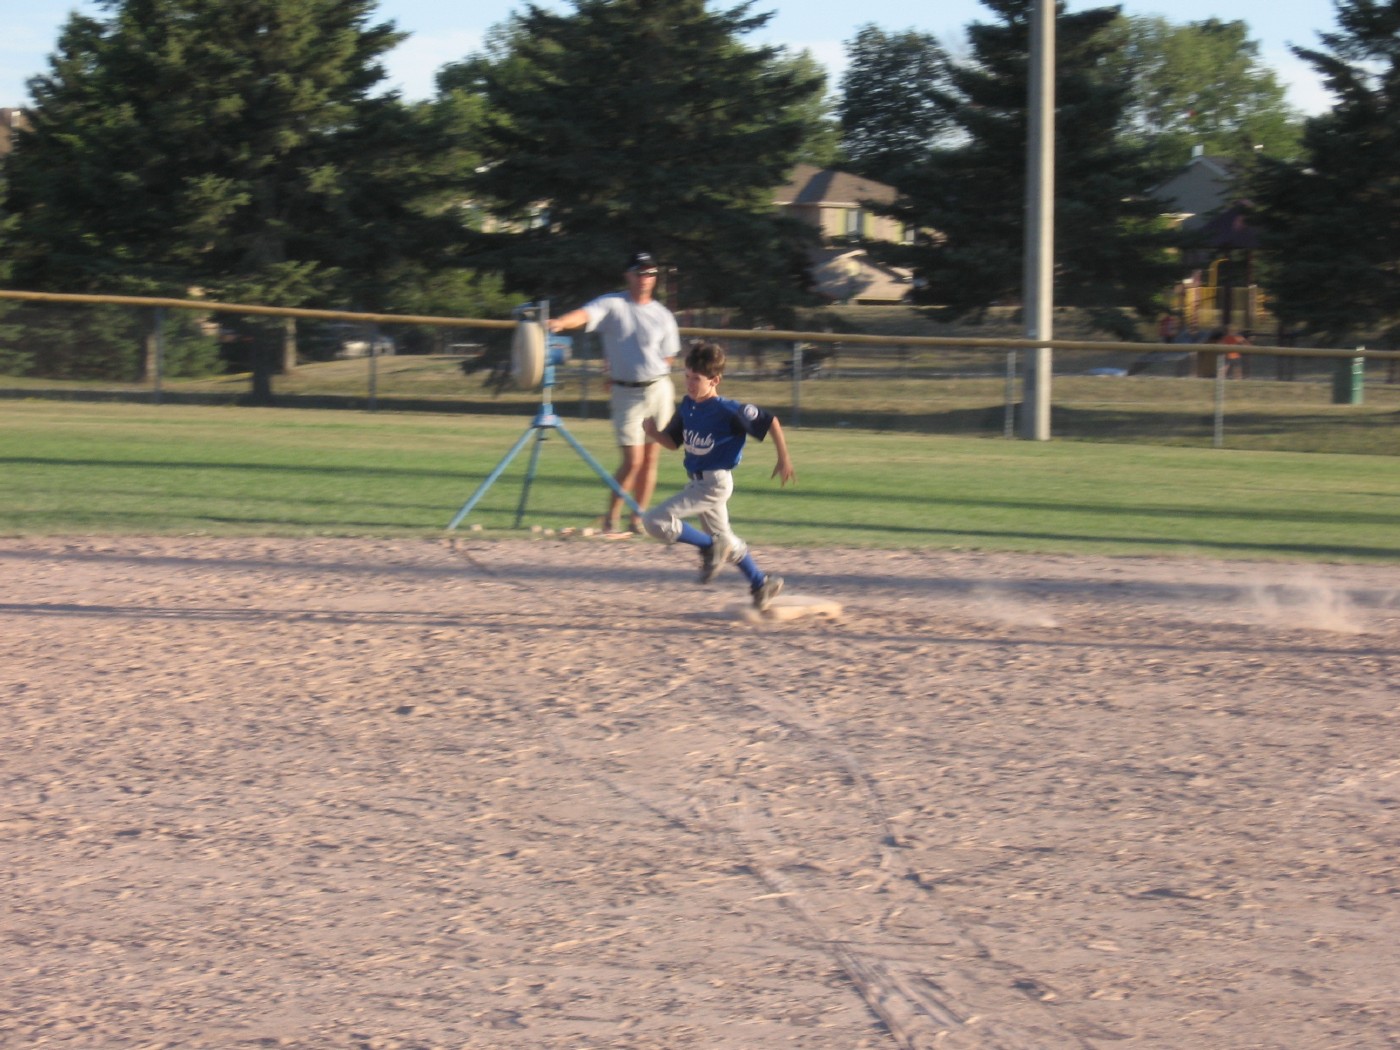 [Blues 2007 photo - Ryan running the bases - Newmarket Silver Bat Tournament]